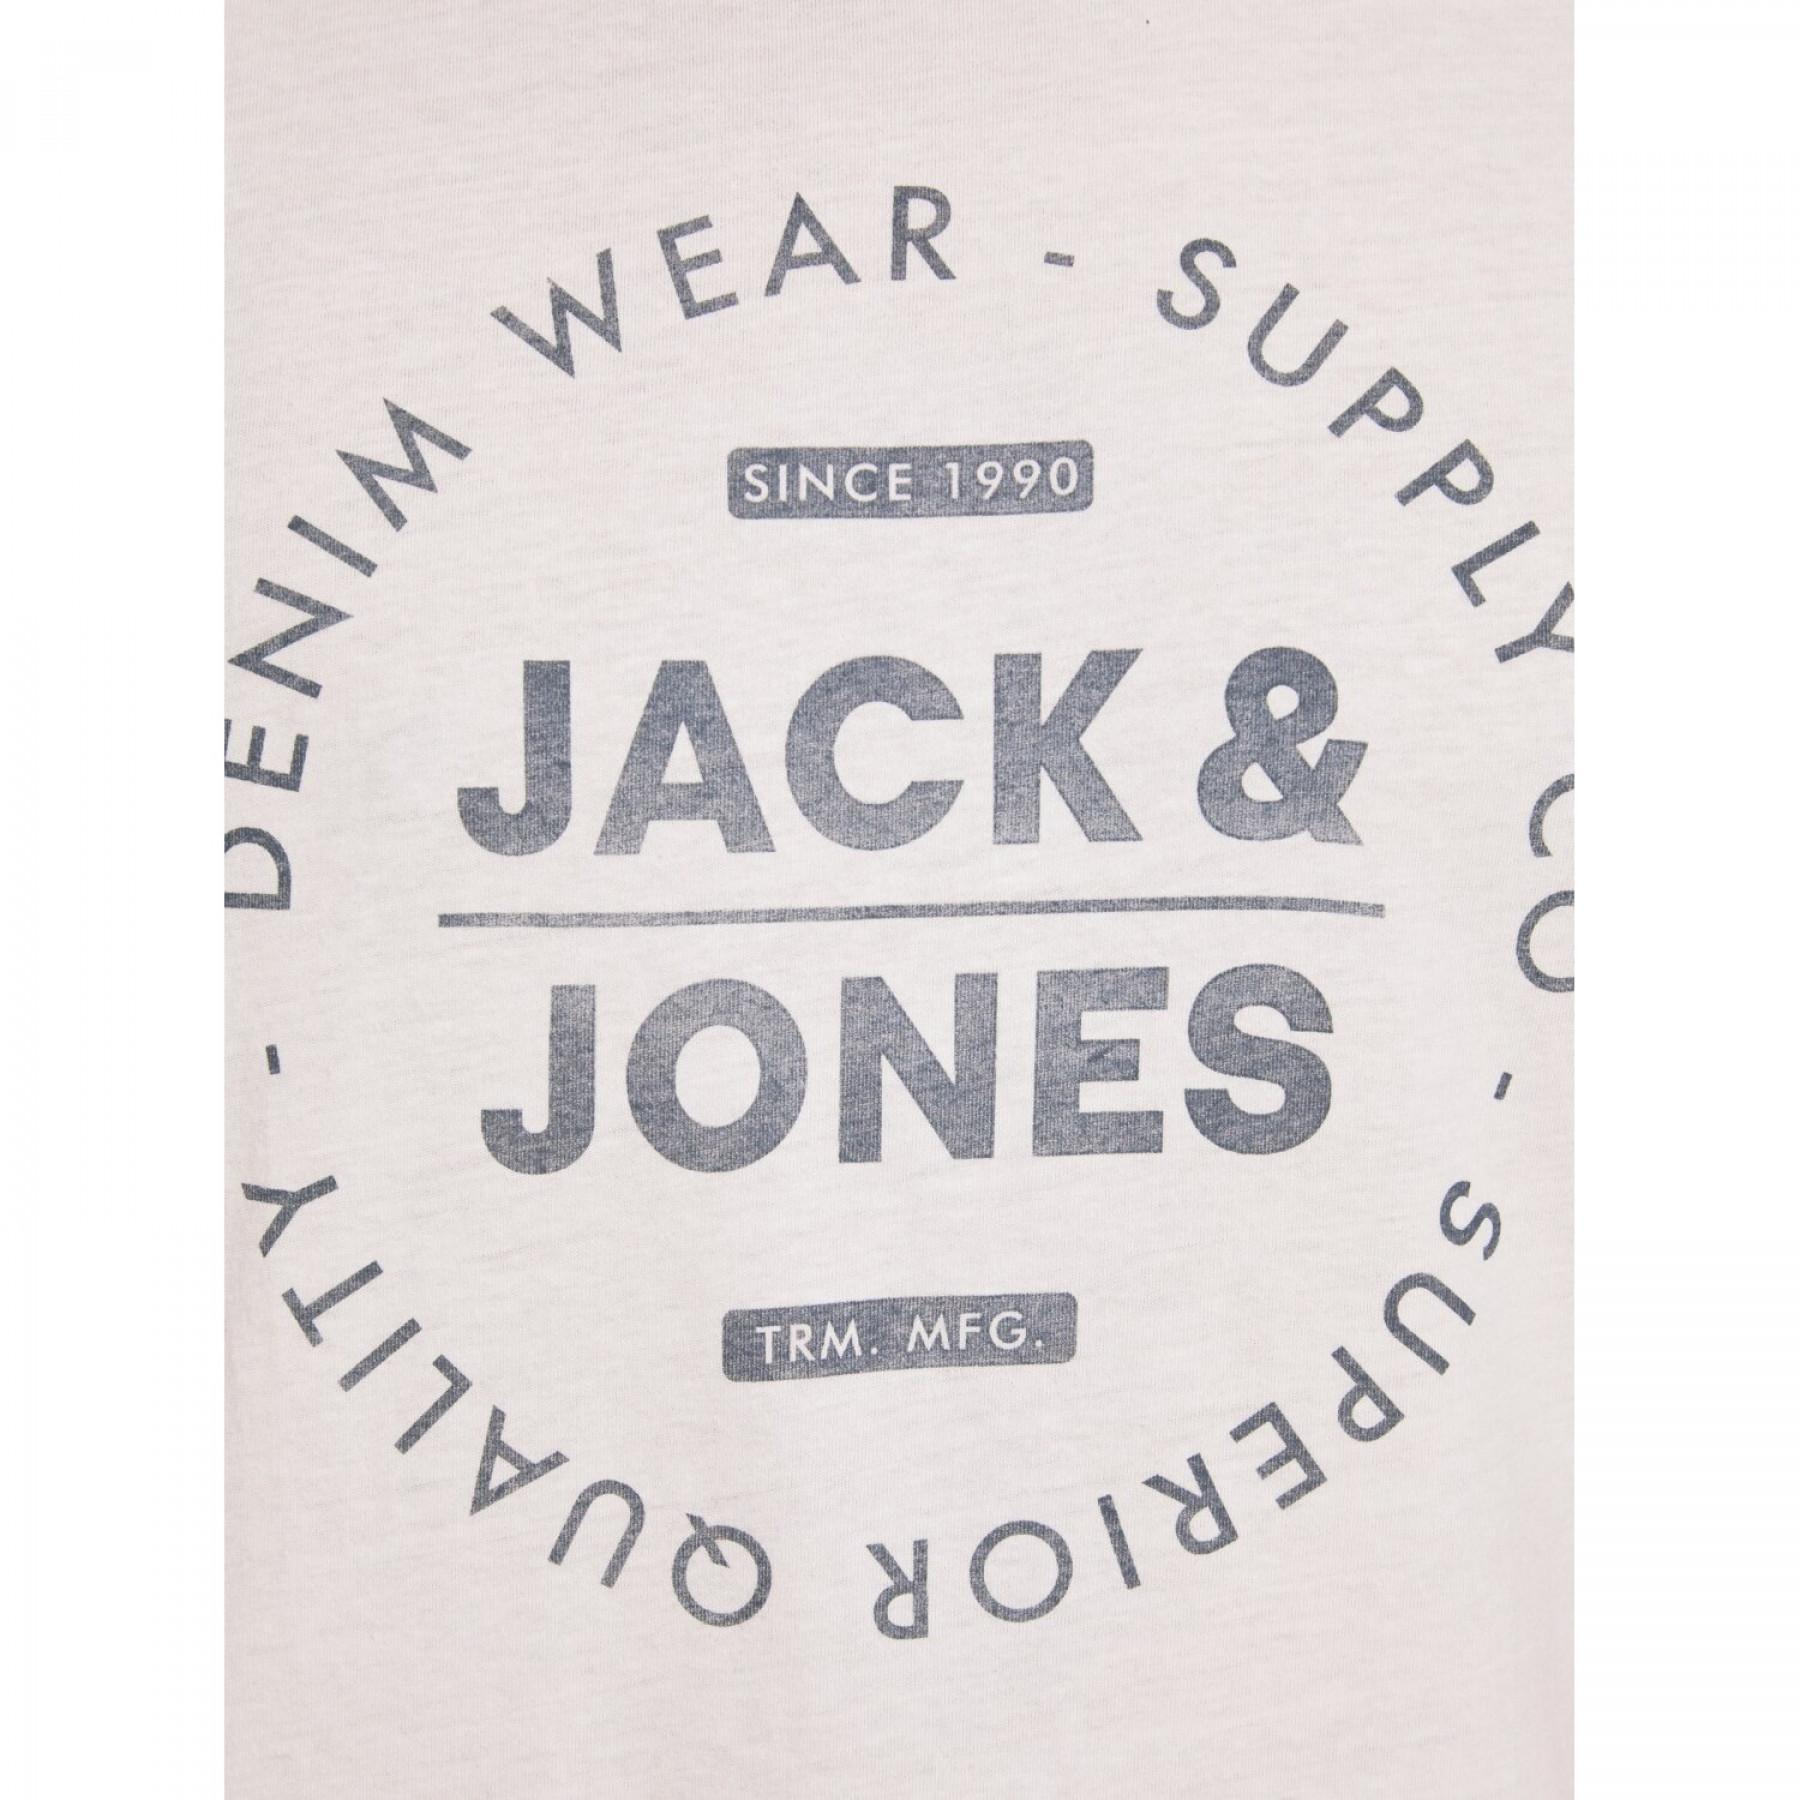 T-shirt Jack & Jones Jeans crew neck 20/21